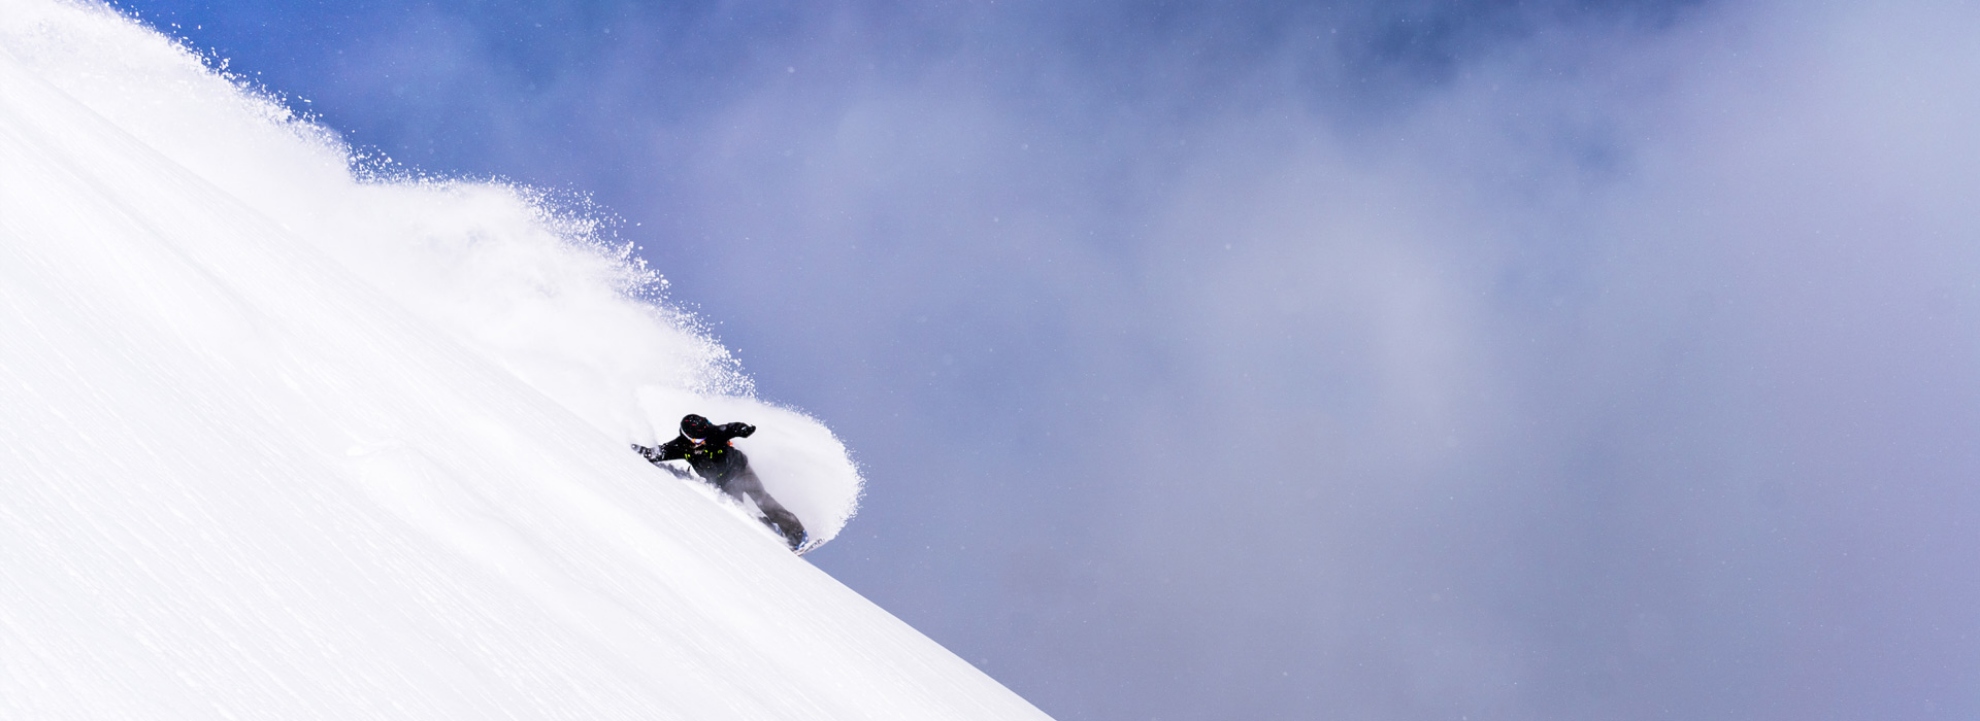 Snowboarder riding deep powder at Brighton Resort